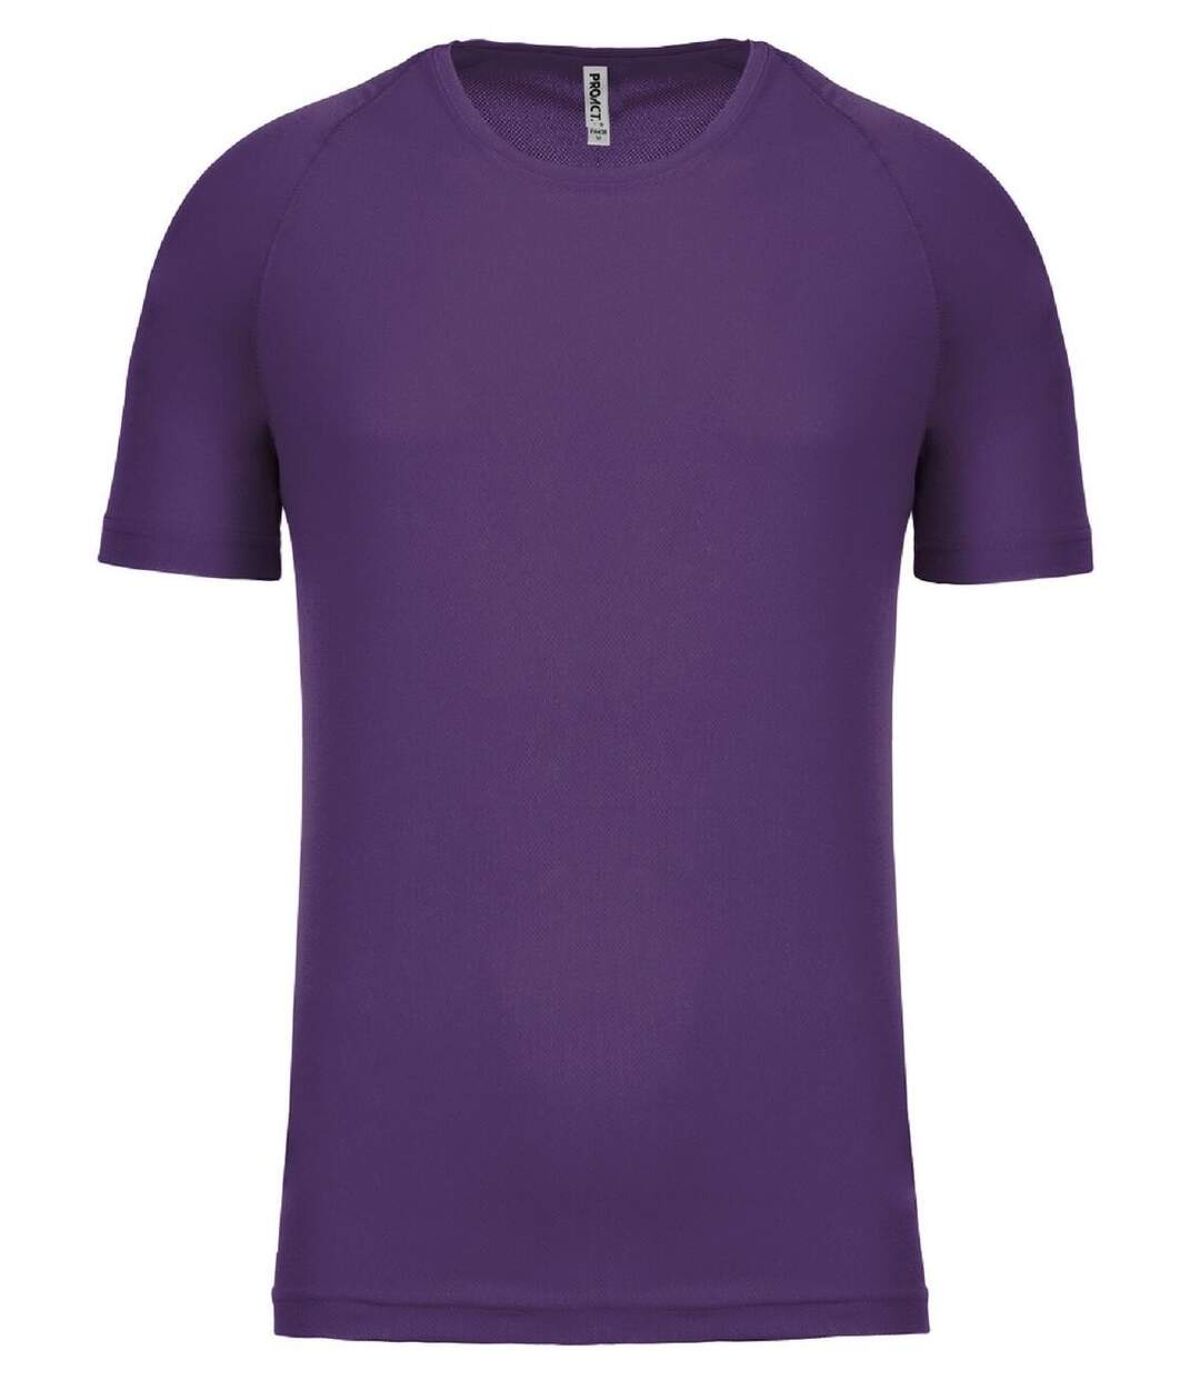 T-shirt sport - Running - Homme - PA438 - violet